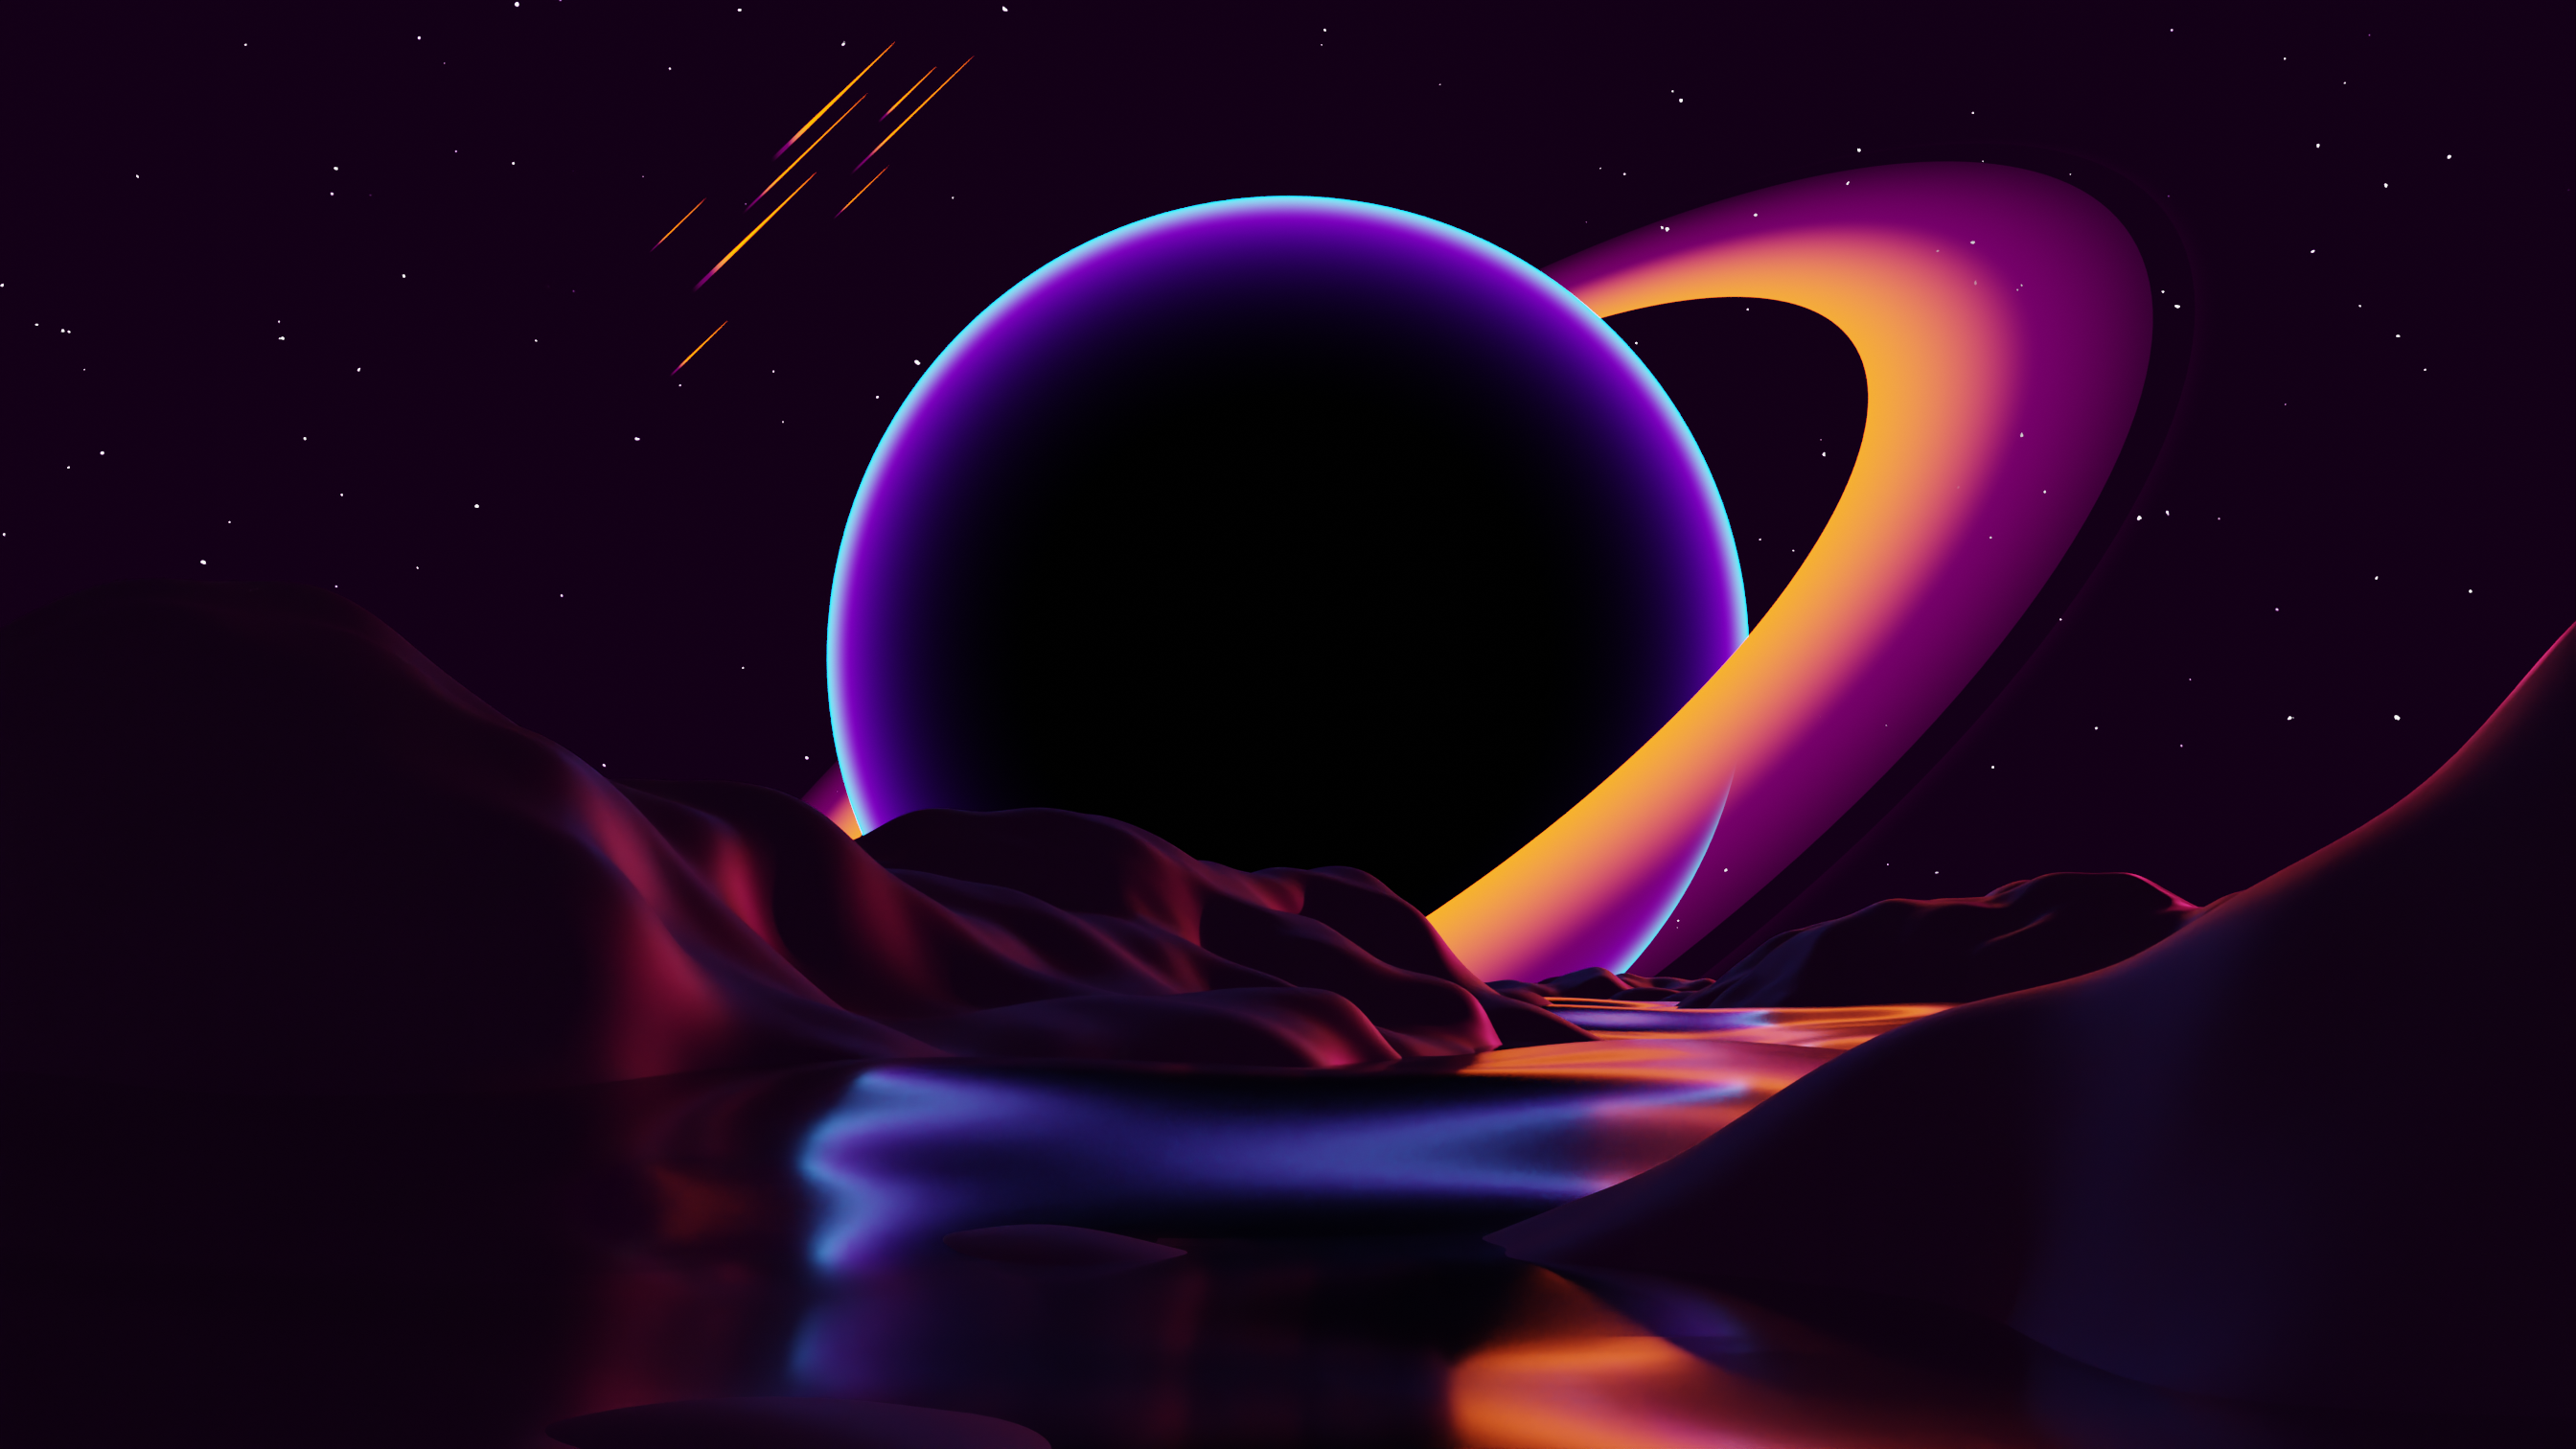 General 2688x1512 digital art artwork illustration planet minimalism dark Saturn planetary rings abstract space